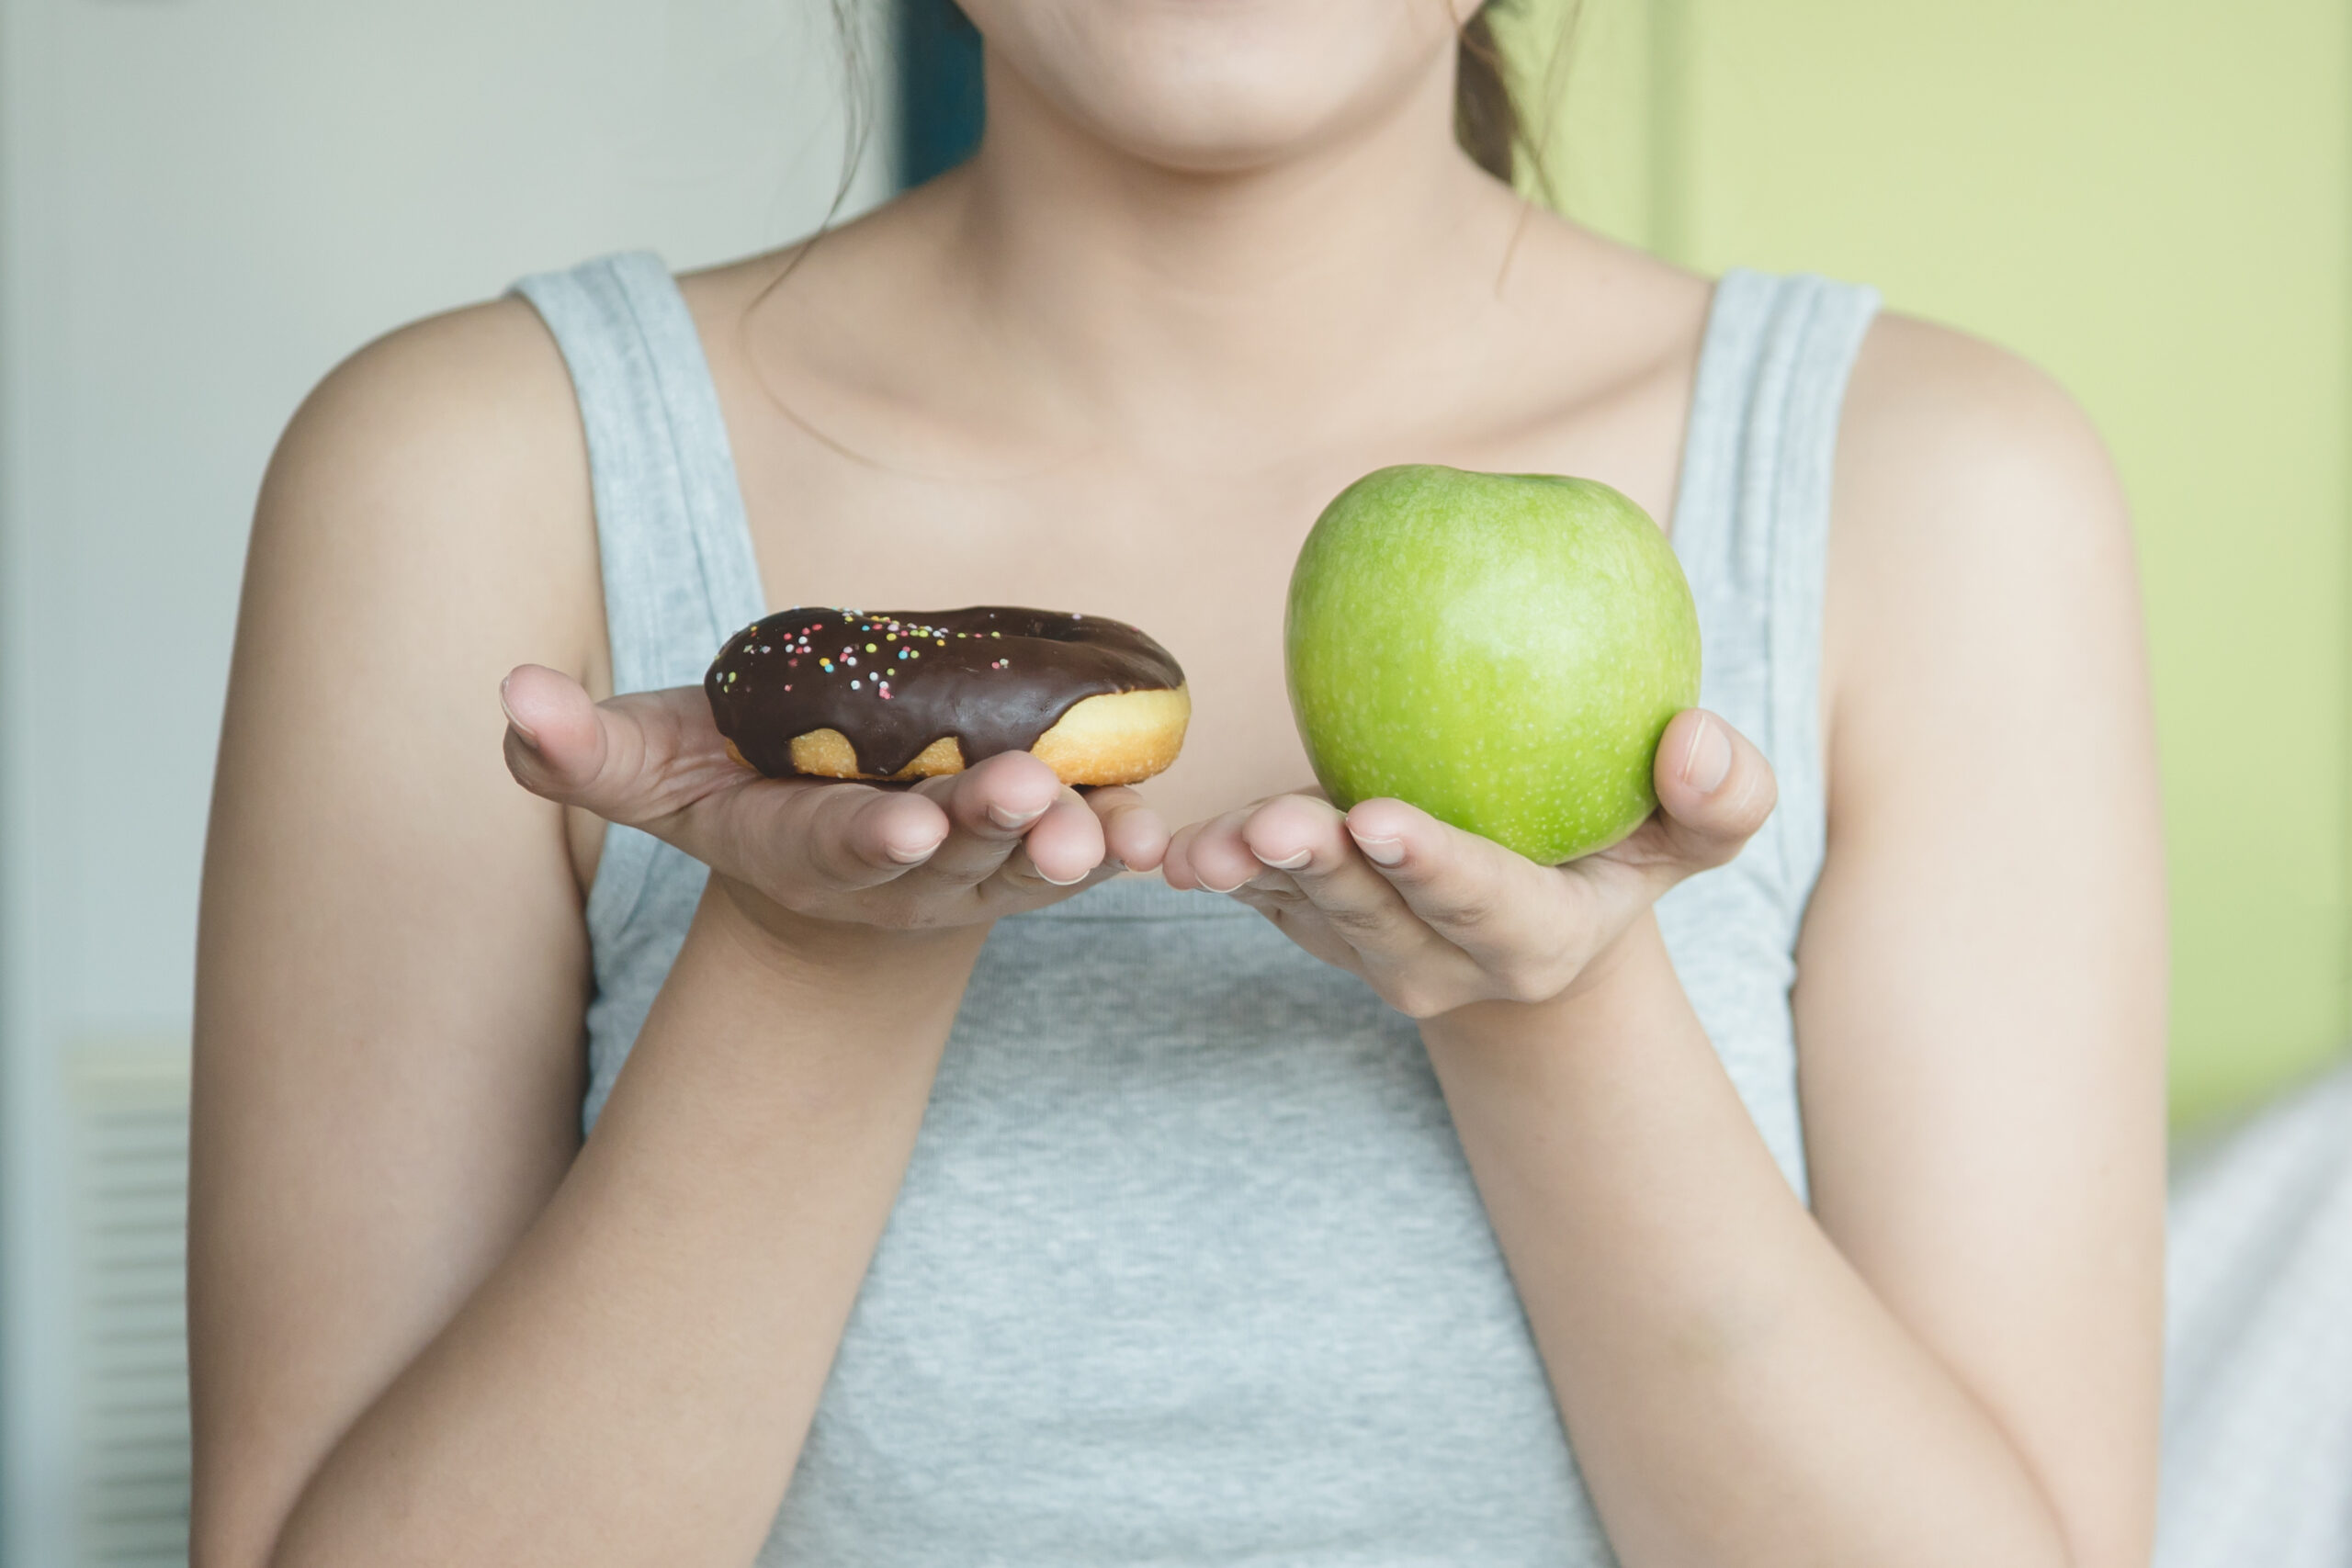 Deciding to eat healthy or unhealthy